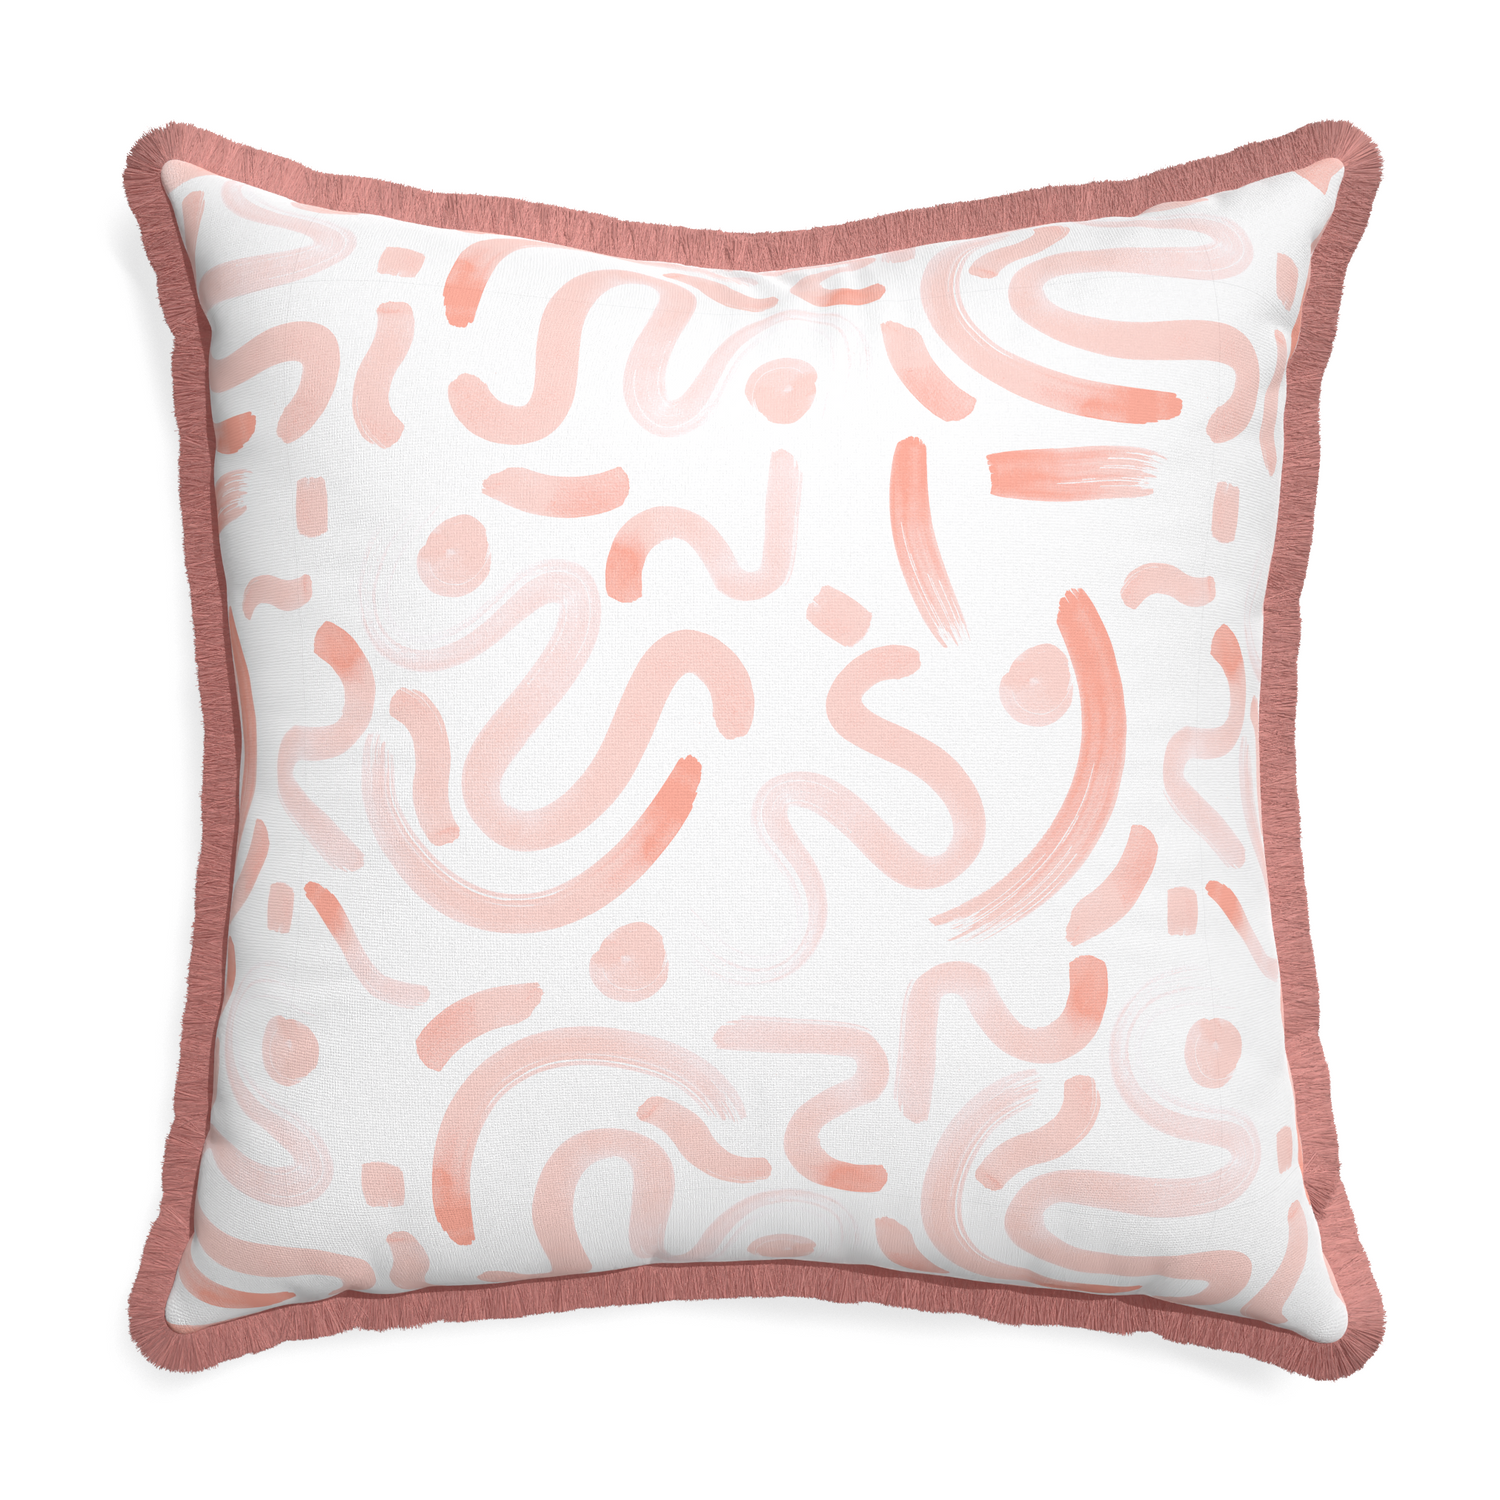 Euro-sham hockney pink custom pillow with d fringe on white background